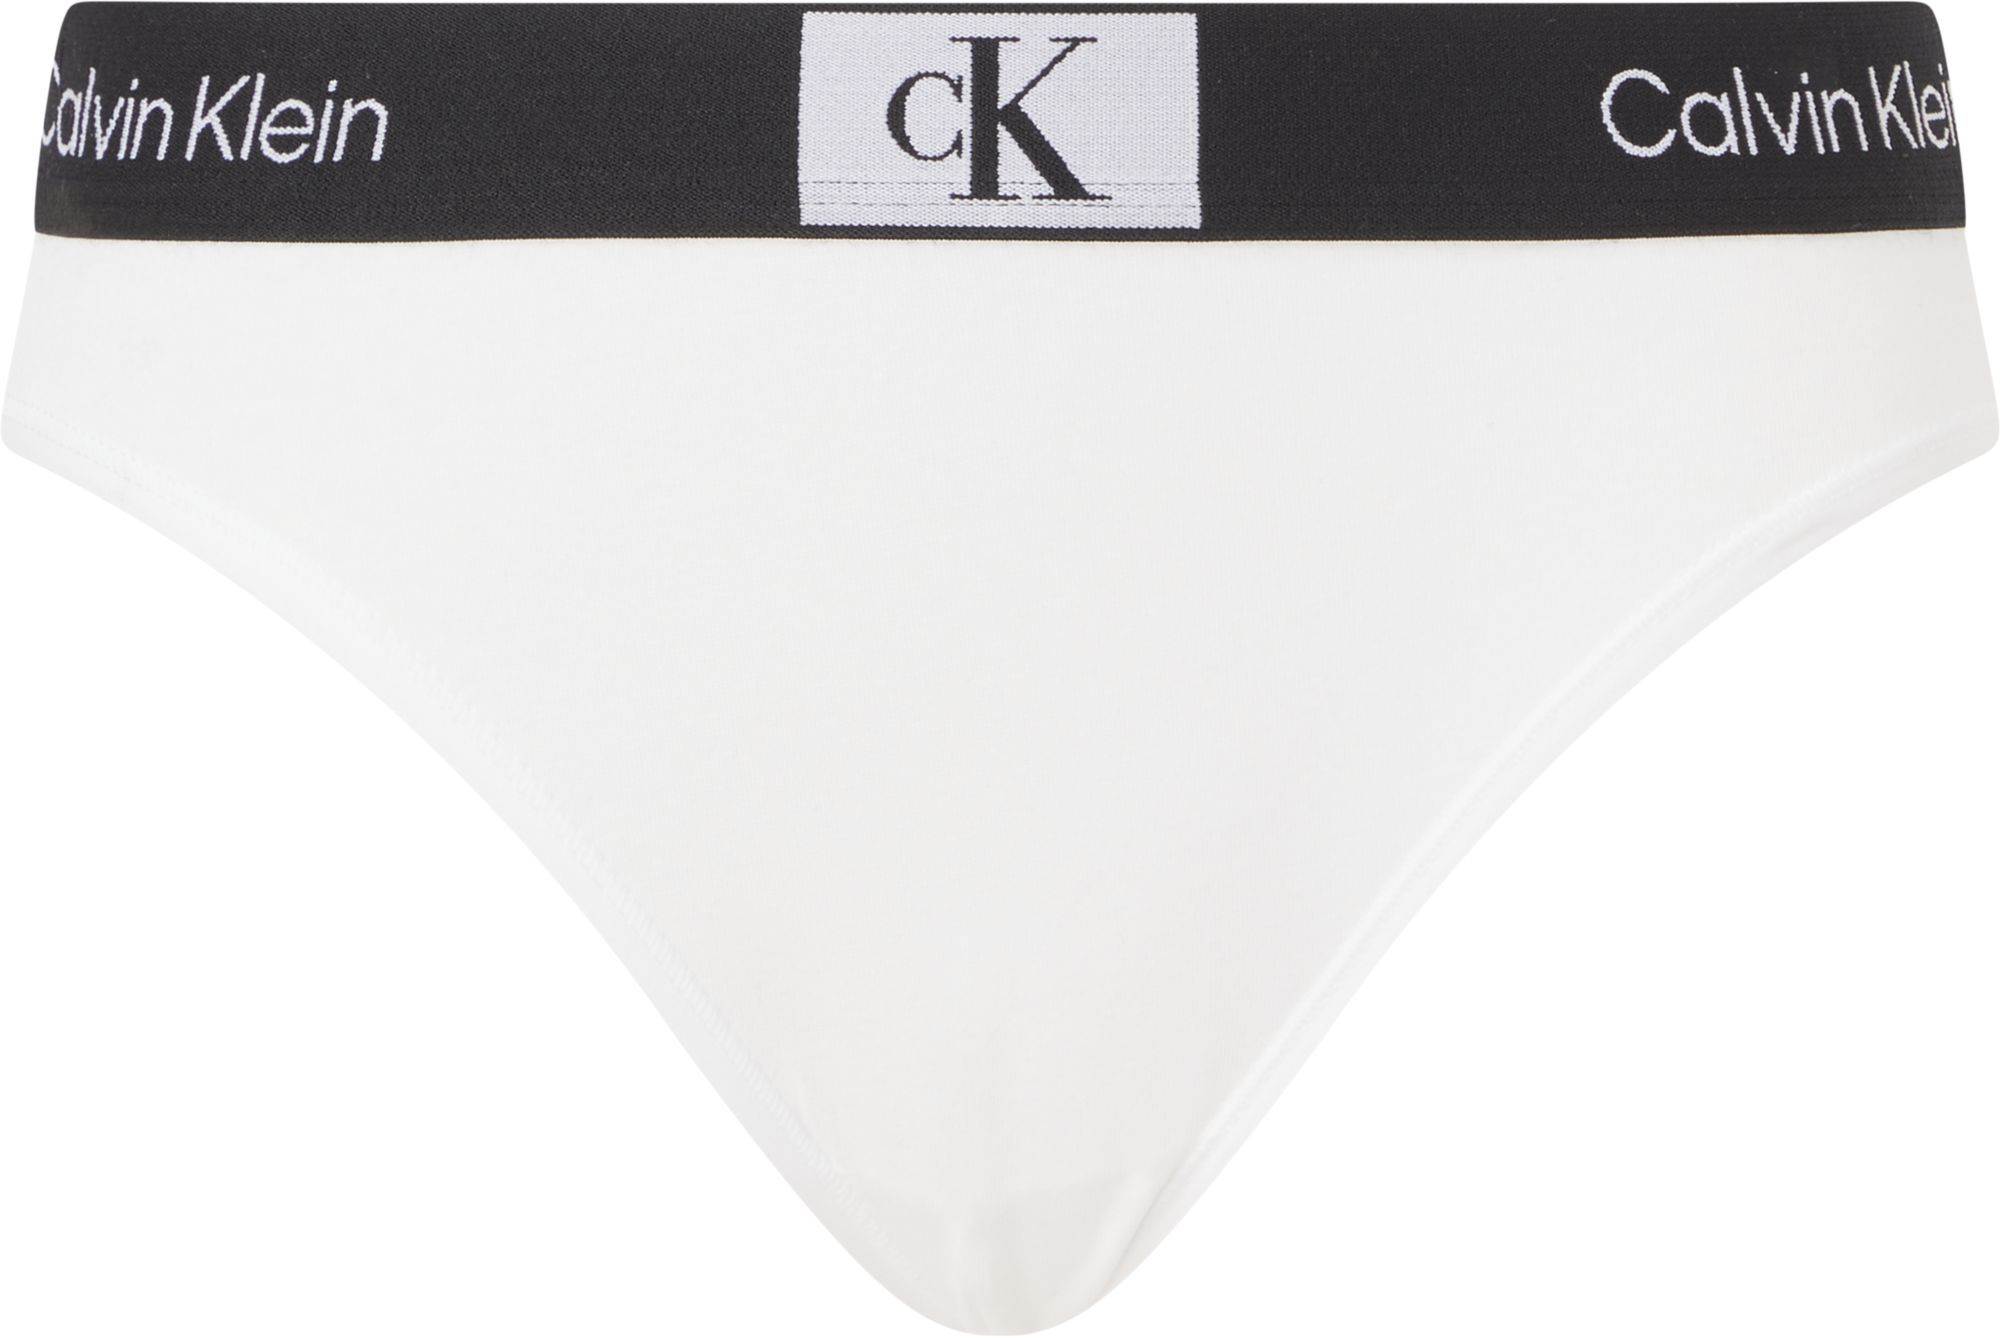 Dámské kalhotky Bikini Briefs CK96 000QF7222E100 bílá - Calvin Klein XL